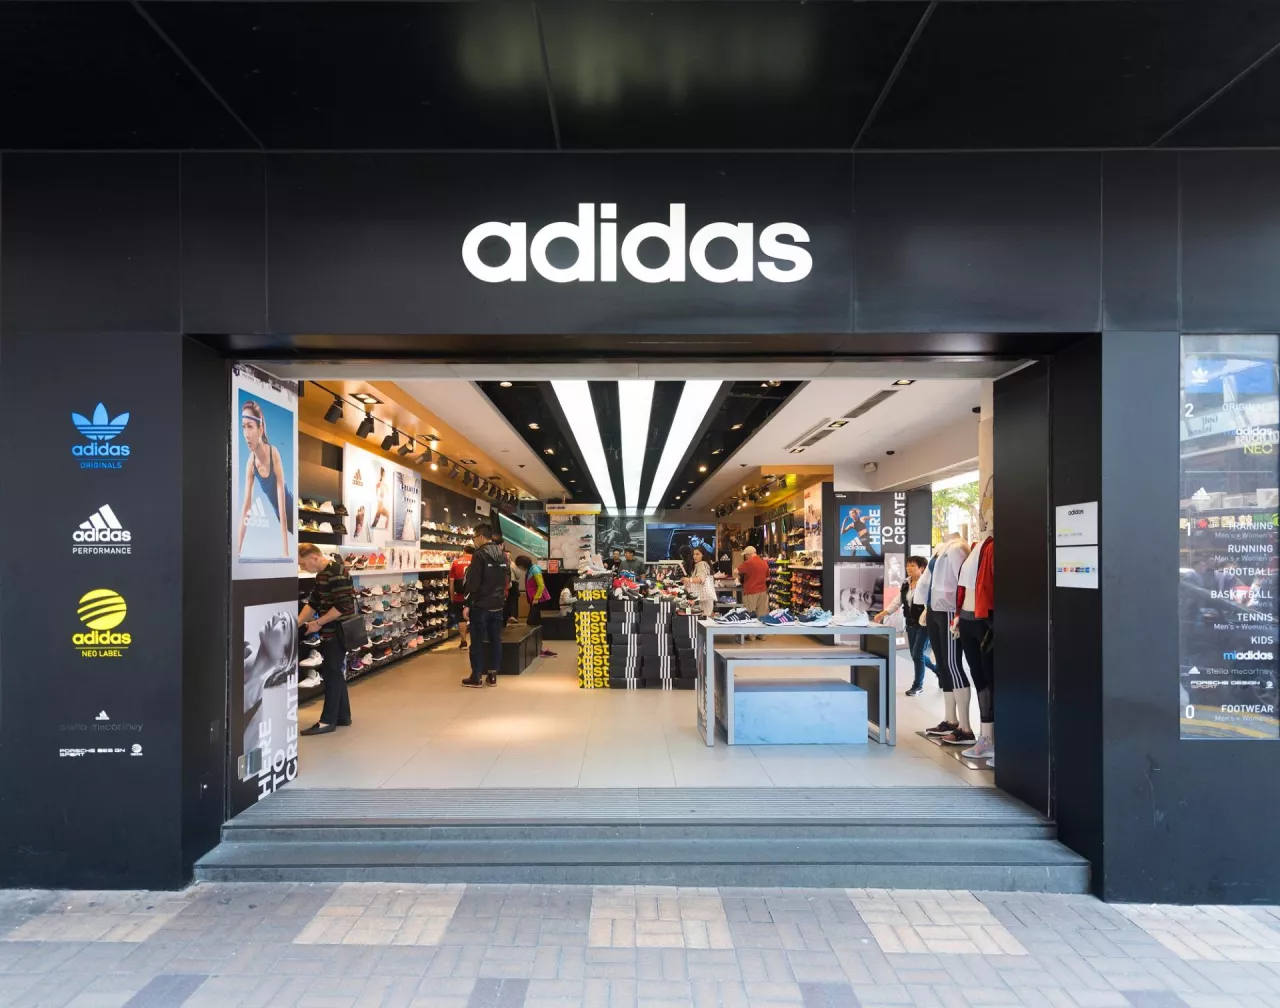 Na zdj. sklep Adidasa w Hong Kongu (fot. withGod / Shutterstock)